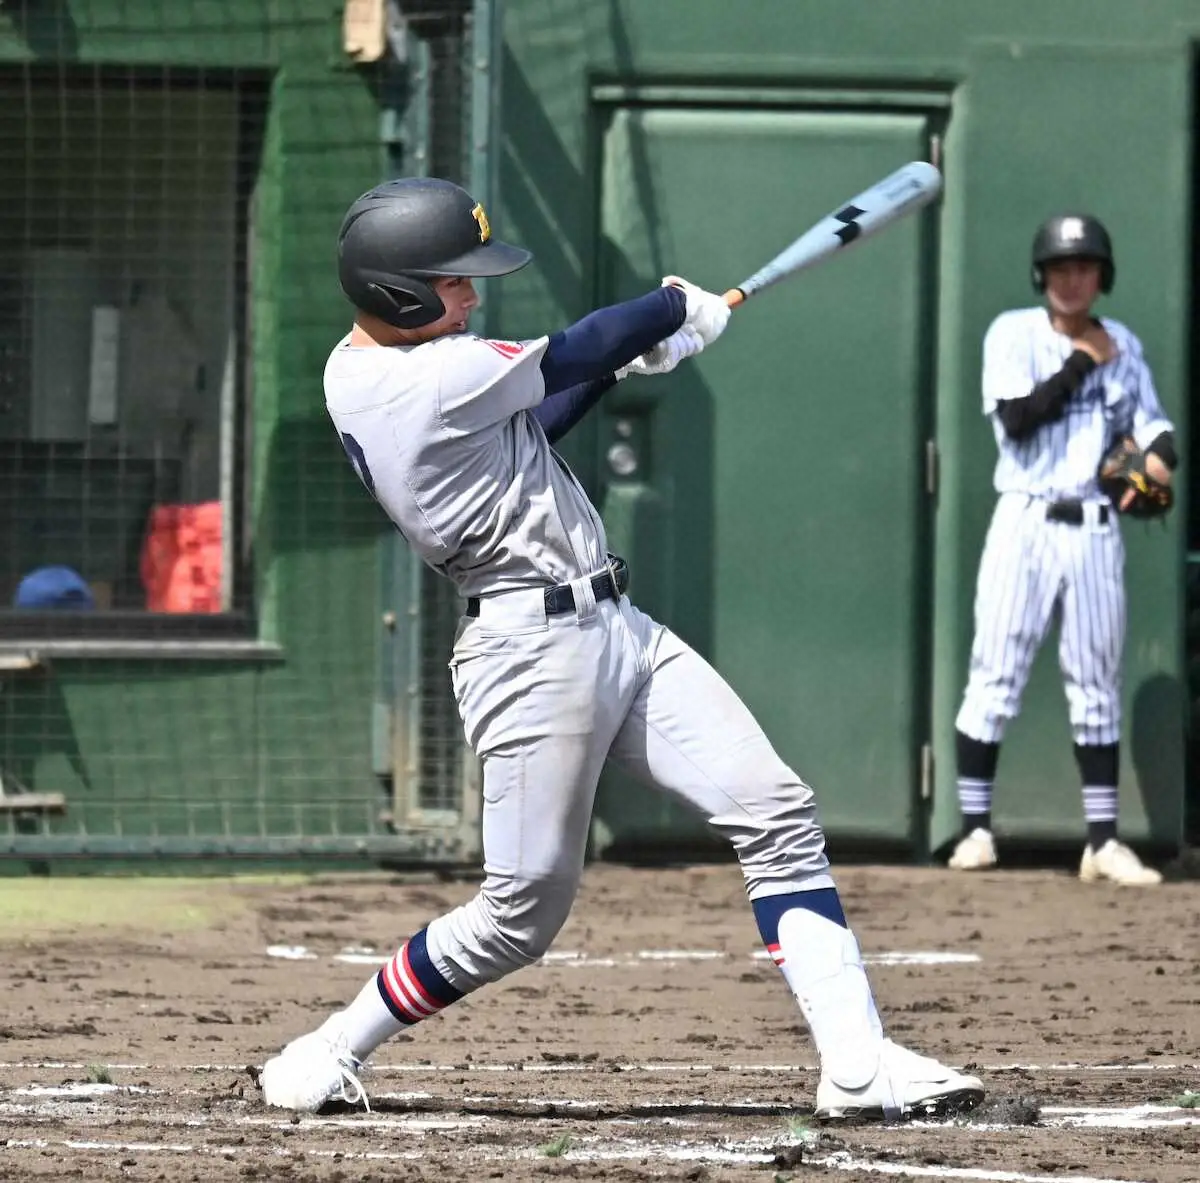 甲子園覇者・慶応が公式戦初陣　新主将・加藤右悟が2打席連続本塁打など強打健在